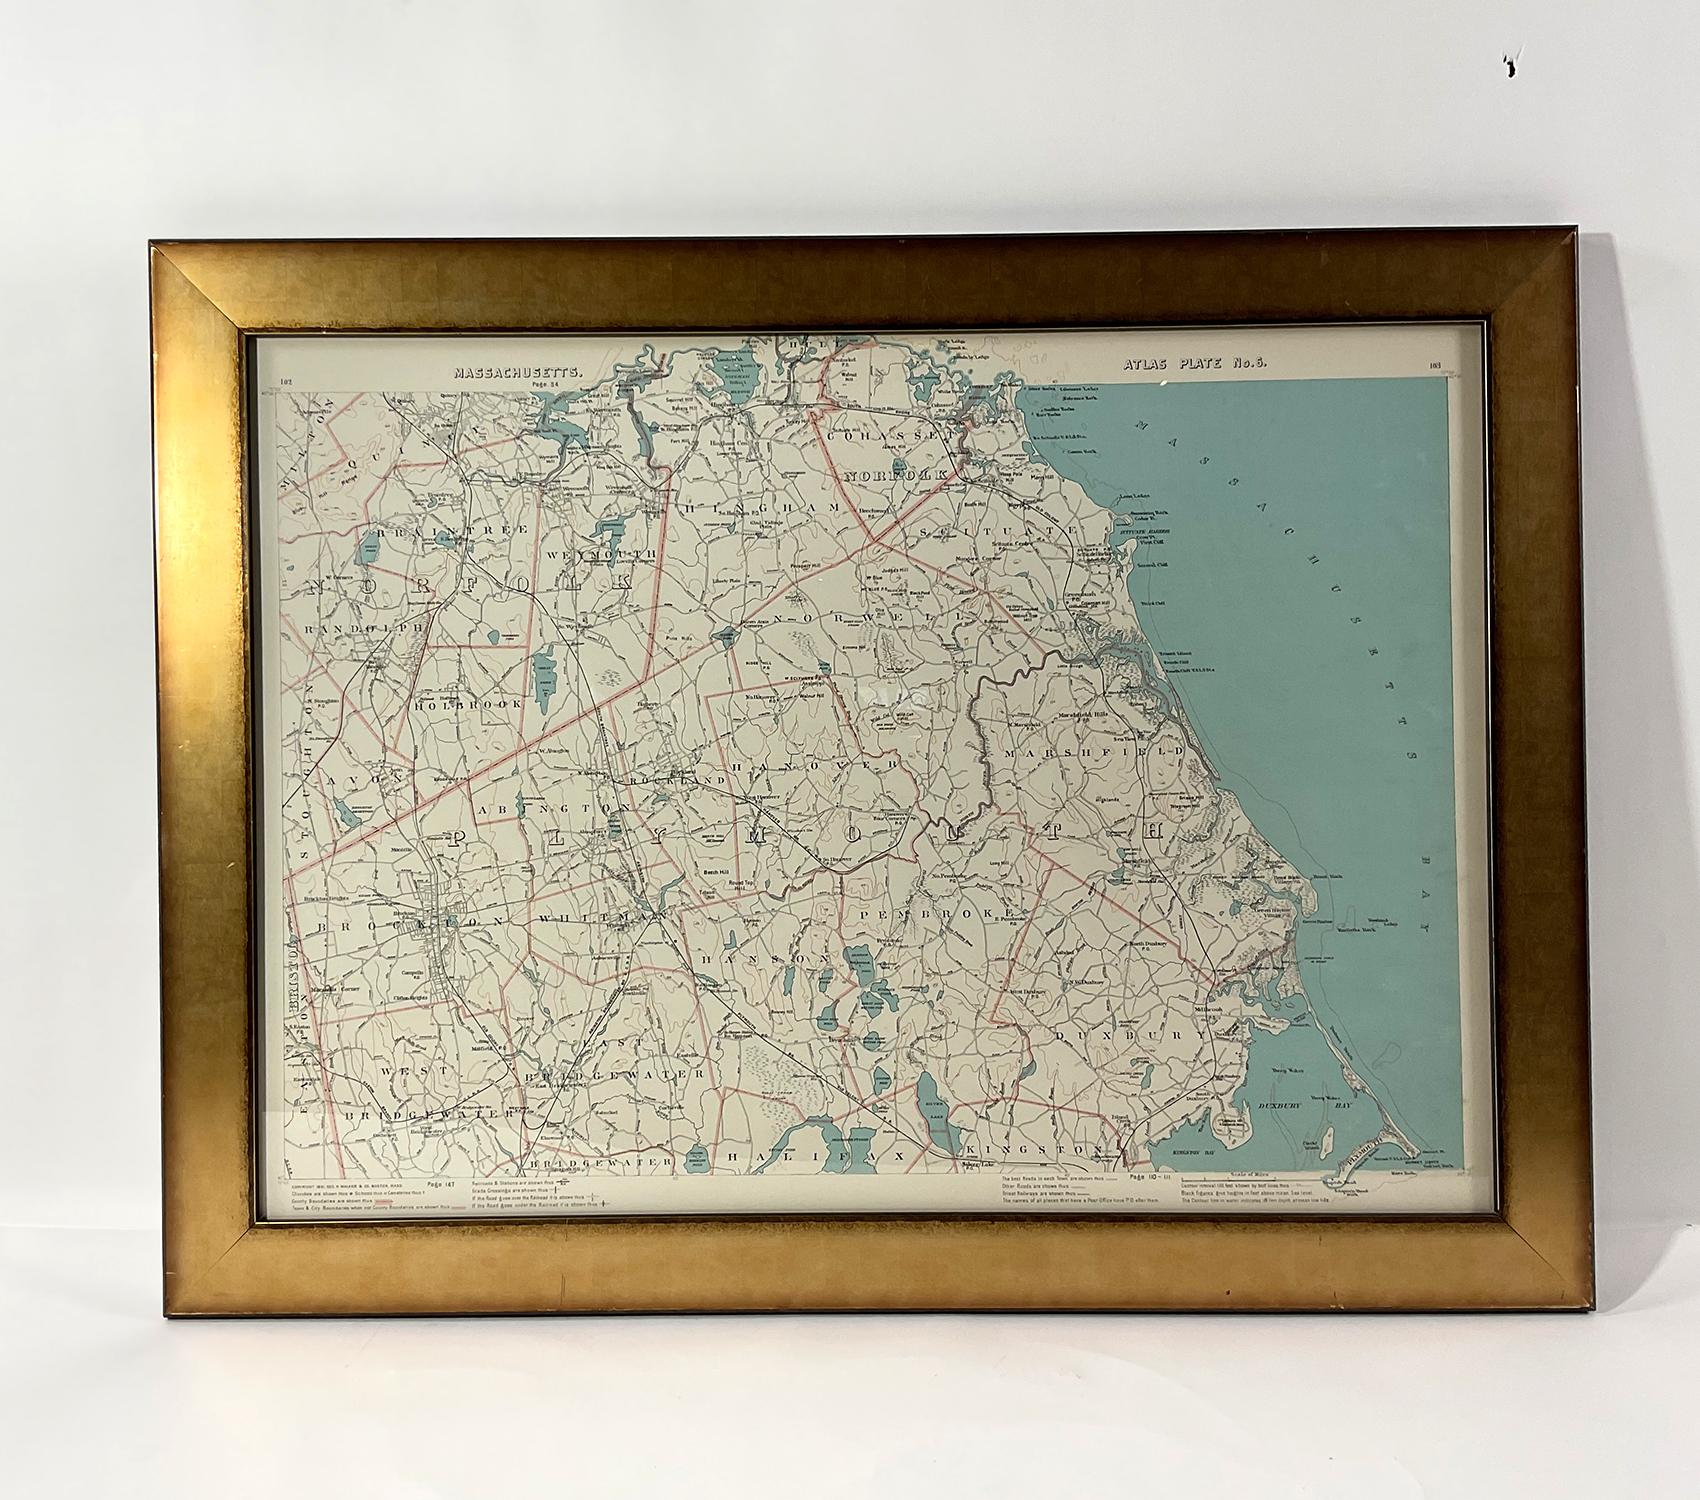 Original 1891 map showing Cohasset, Scituate, Marshfield, Duxbury, Kingston, Norwell, Hanover, Hingham, Hull, Holbrook, Weymouth, Hanson, Pembroke, etc. Framed with glass. Circa 1891.